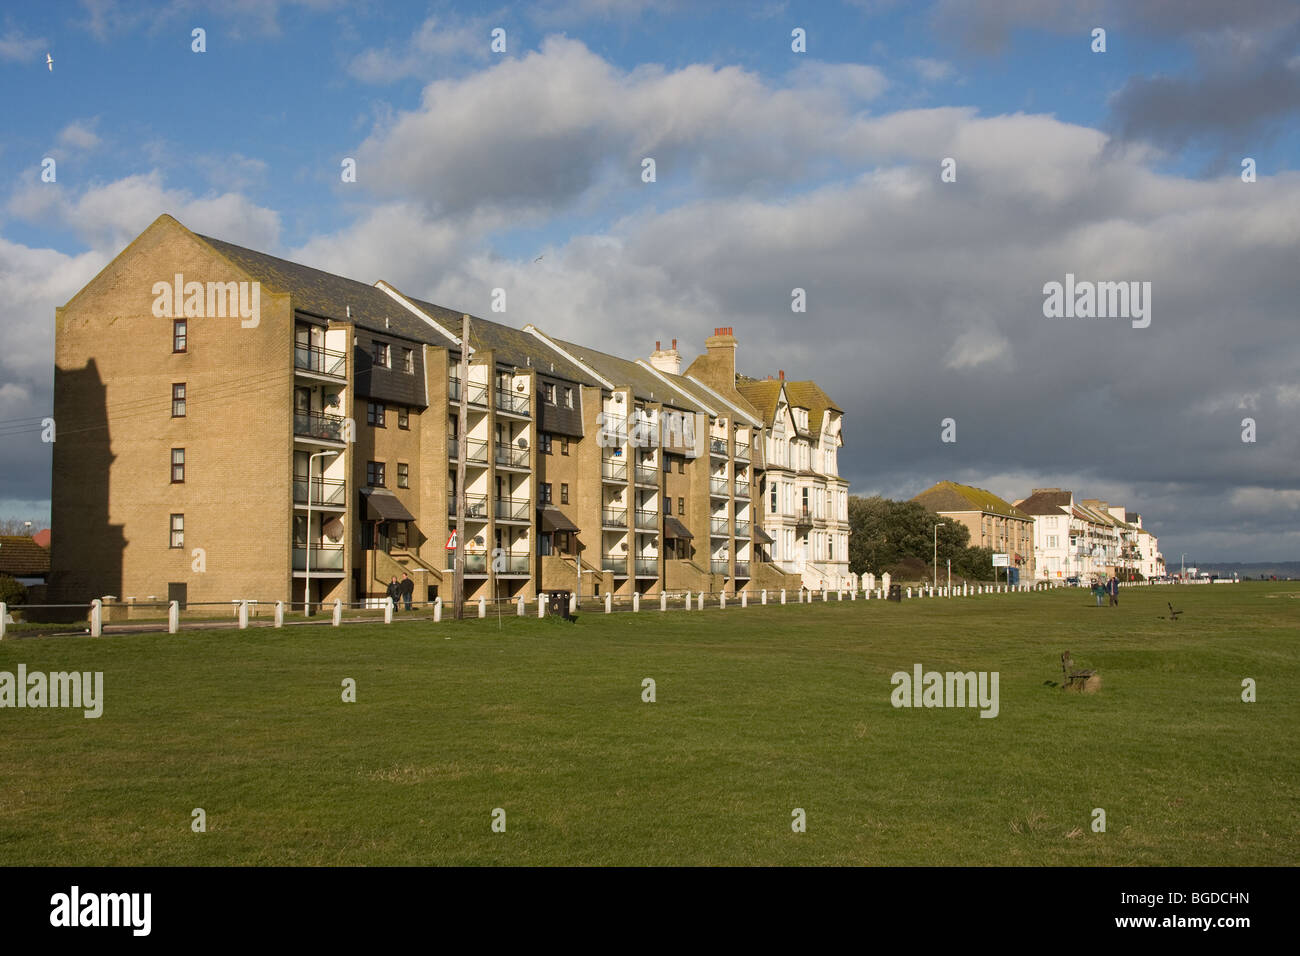 modern low rise brick flats sea view grass verge Stock Photo